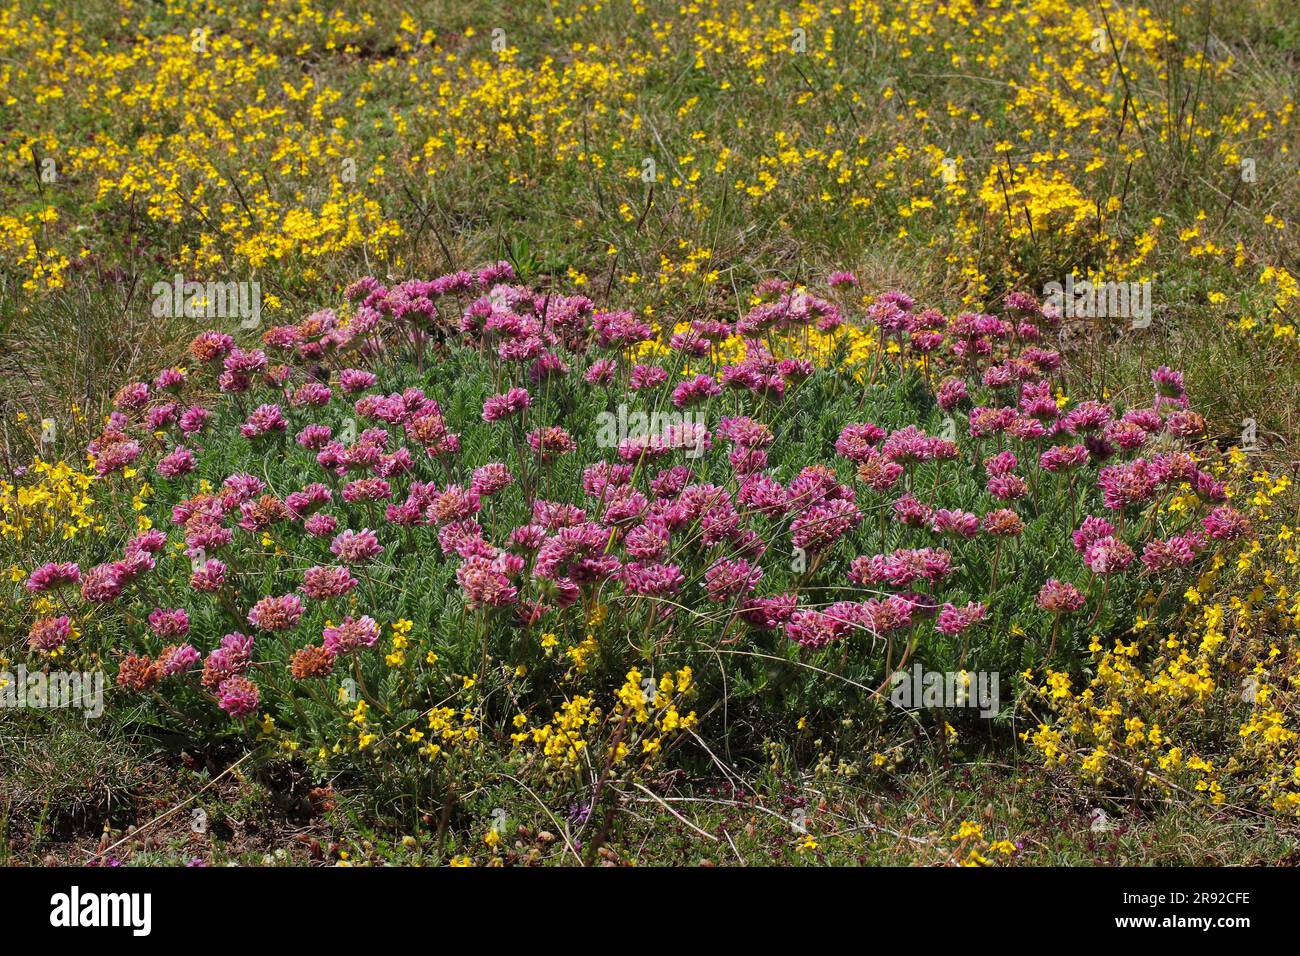 mountain kidney vetch (Anthyllis montana), blooming, Germany Stock Photo